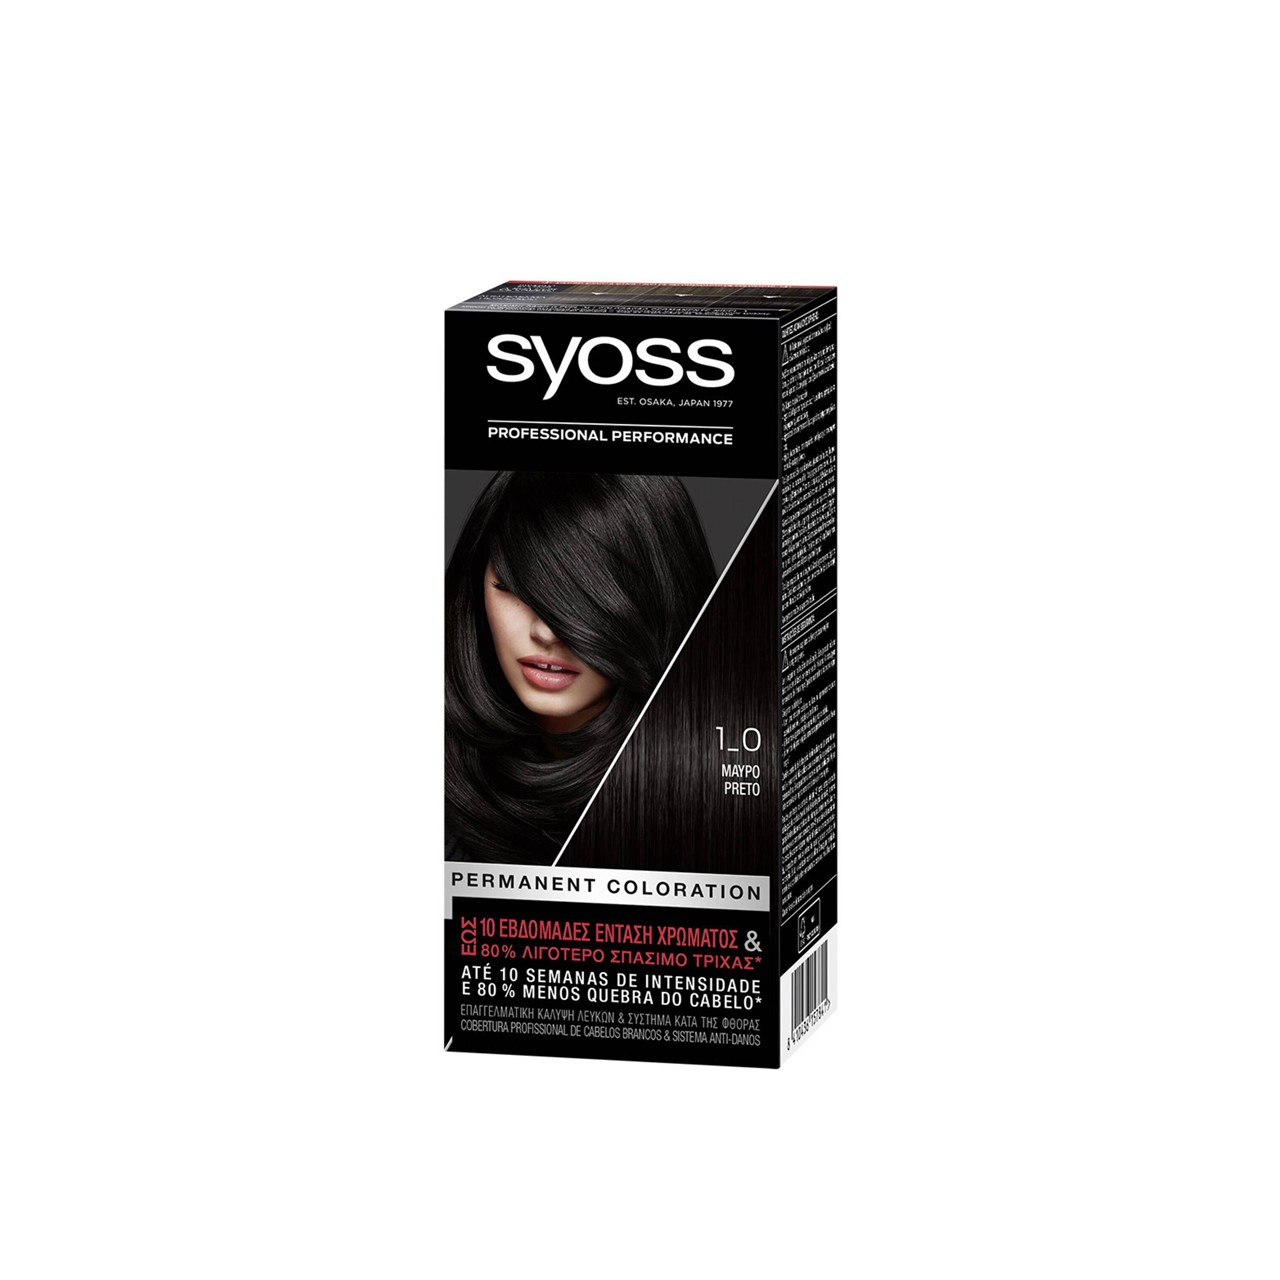 Syoss Permanent Coloration 1_0 Black Permanent Hair Dye